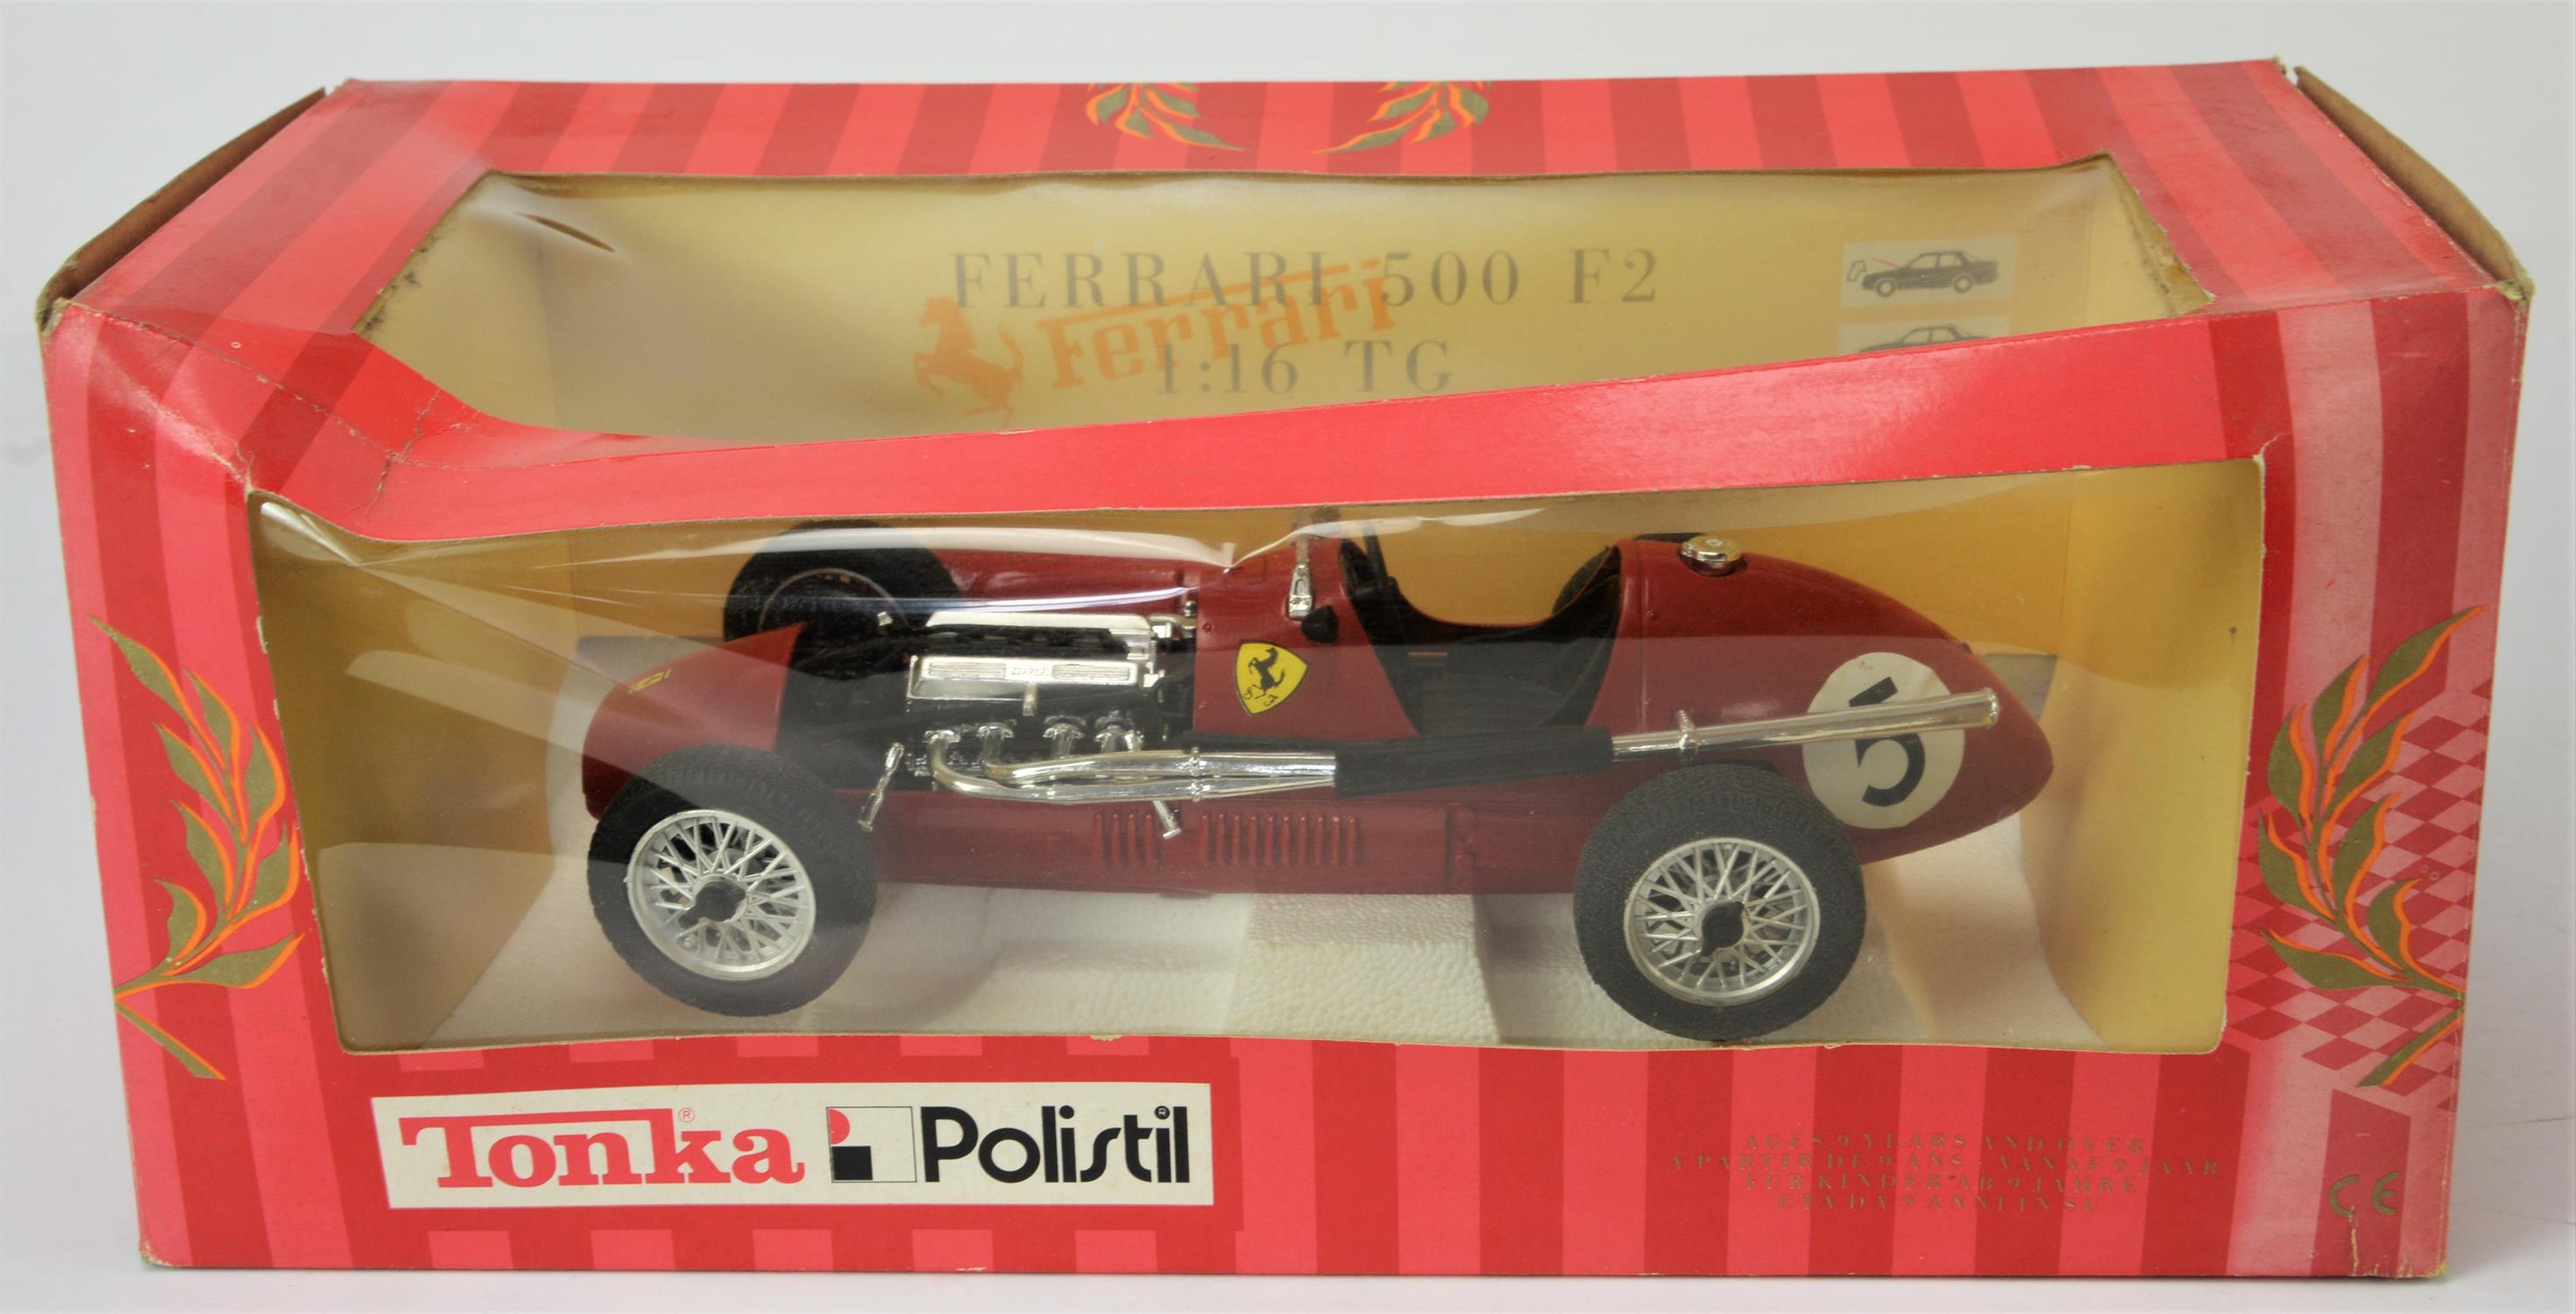 F1 Boxed models and framed items - Models to include, Tonka Polistil, Burago Ferrari F1 models, - Image 3 of 6